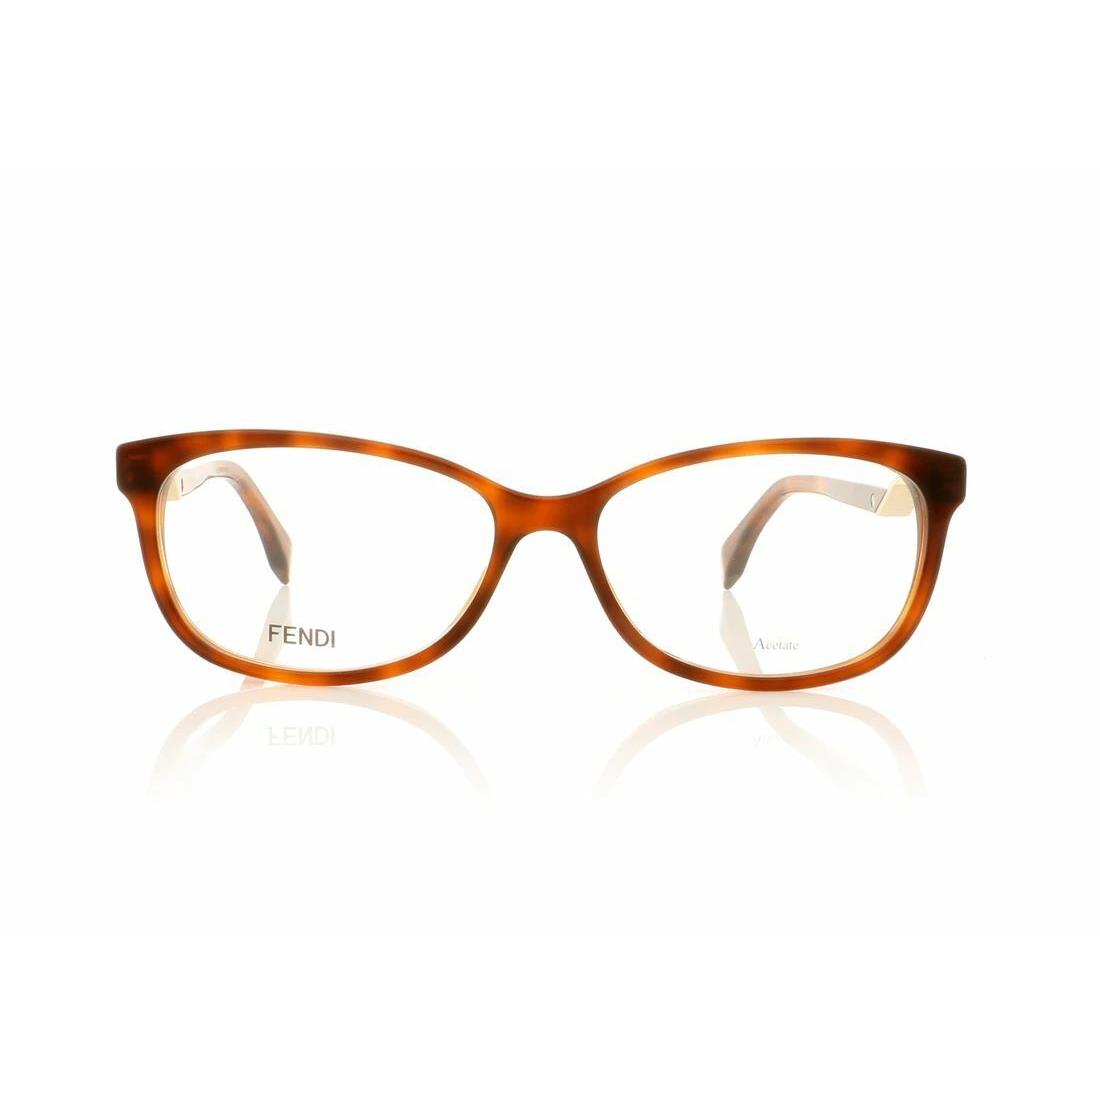 Fendi Eyeglasses - FF 0233 0086 Dark Havana - 54-15-140